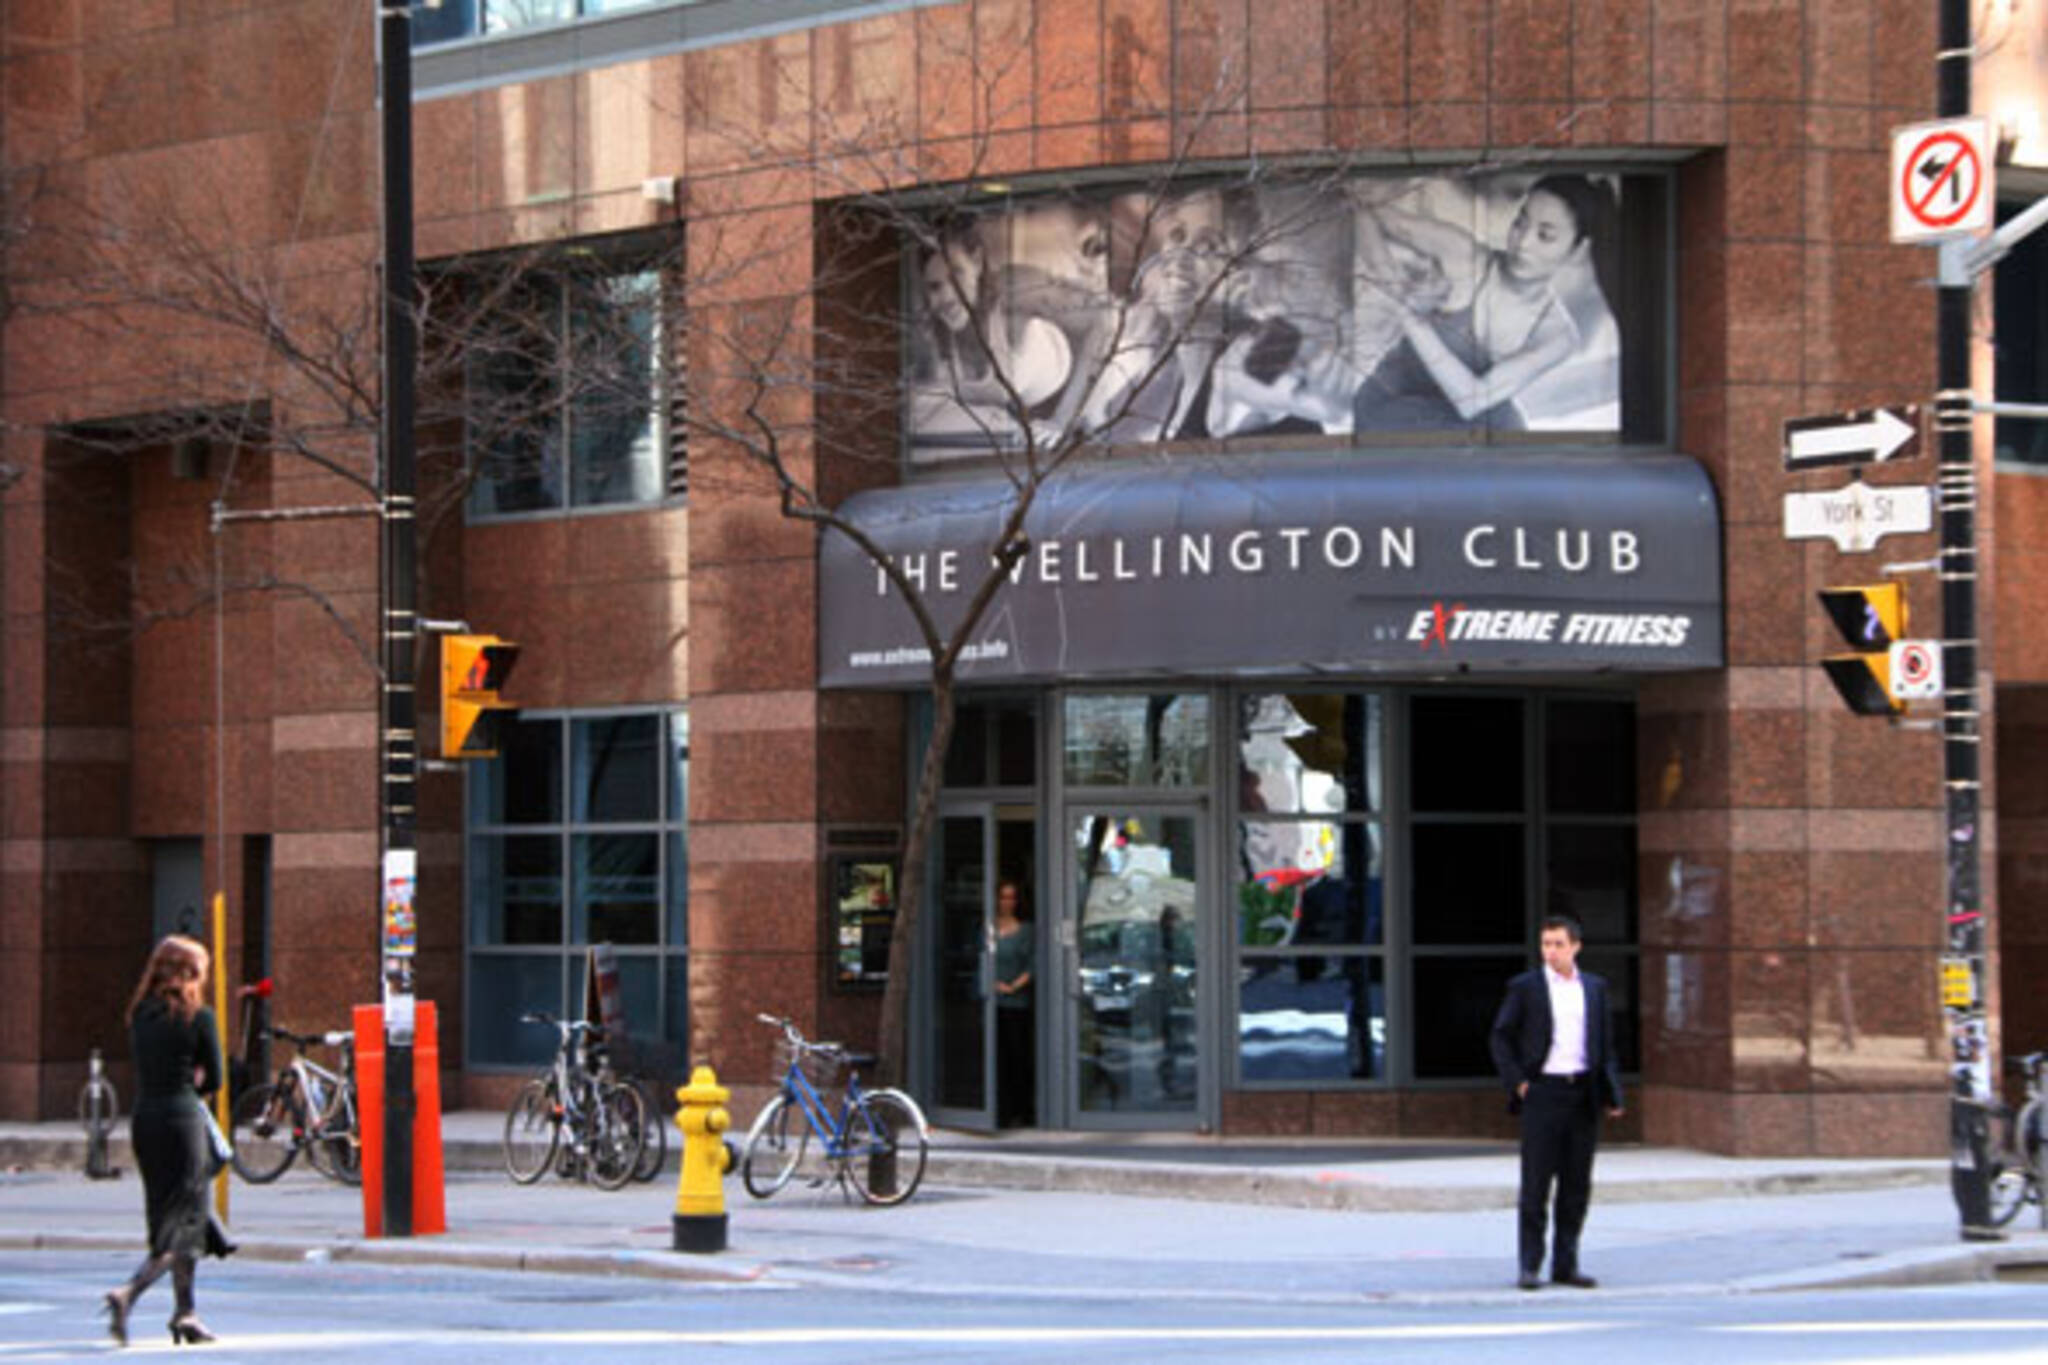 The Wellington Club